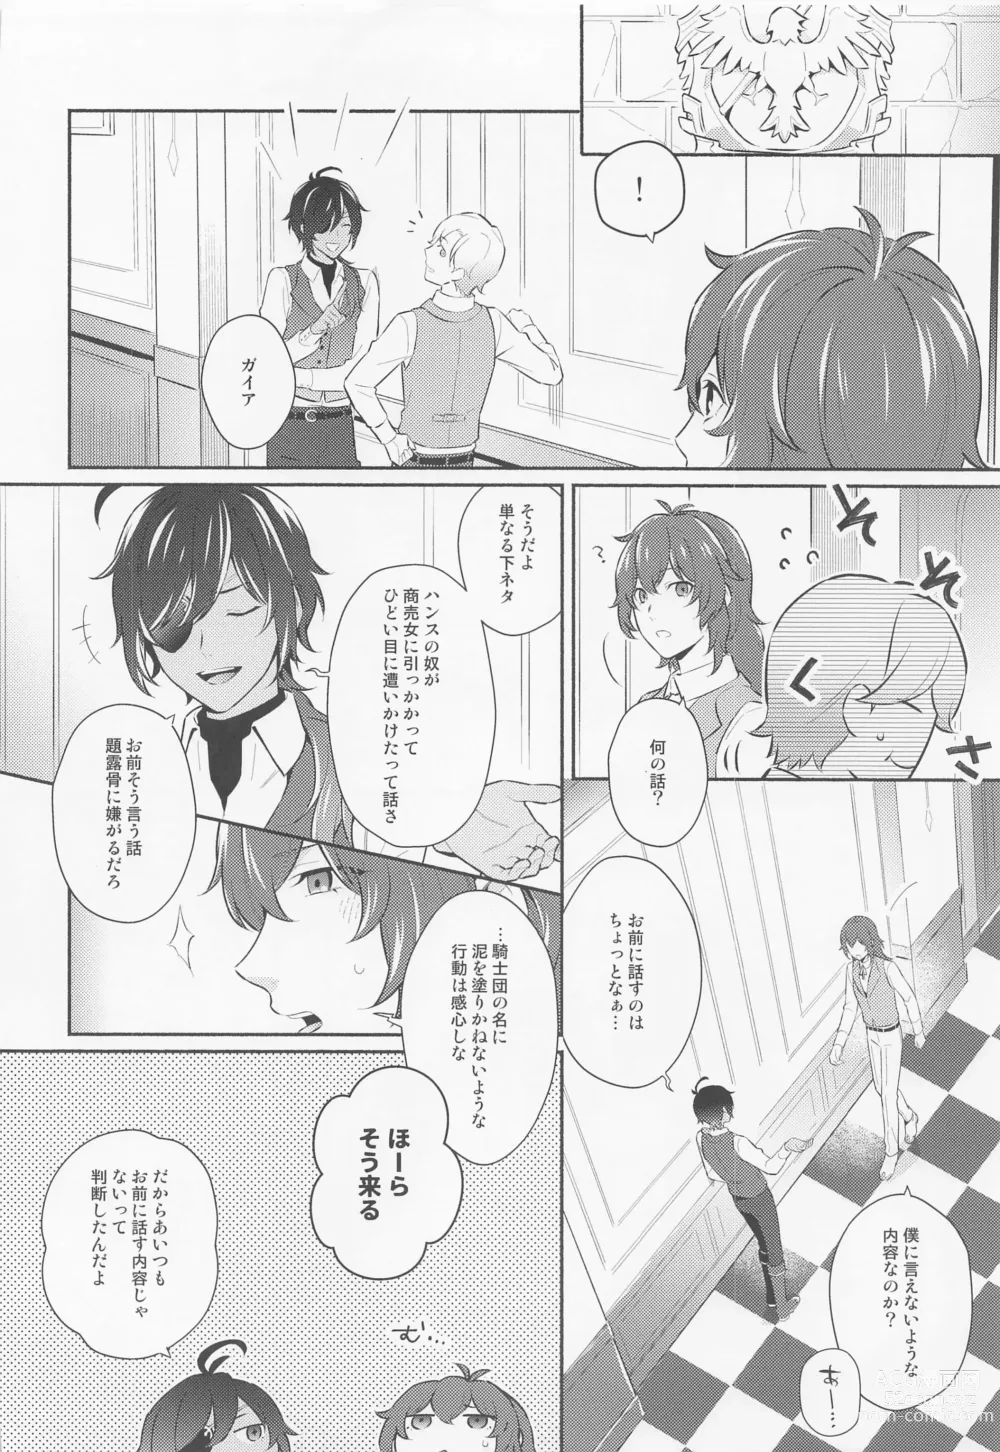 Page 9 of doujinshi Kimi to Yoake o